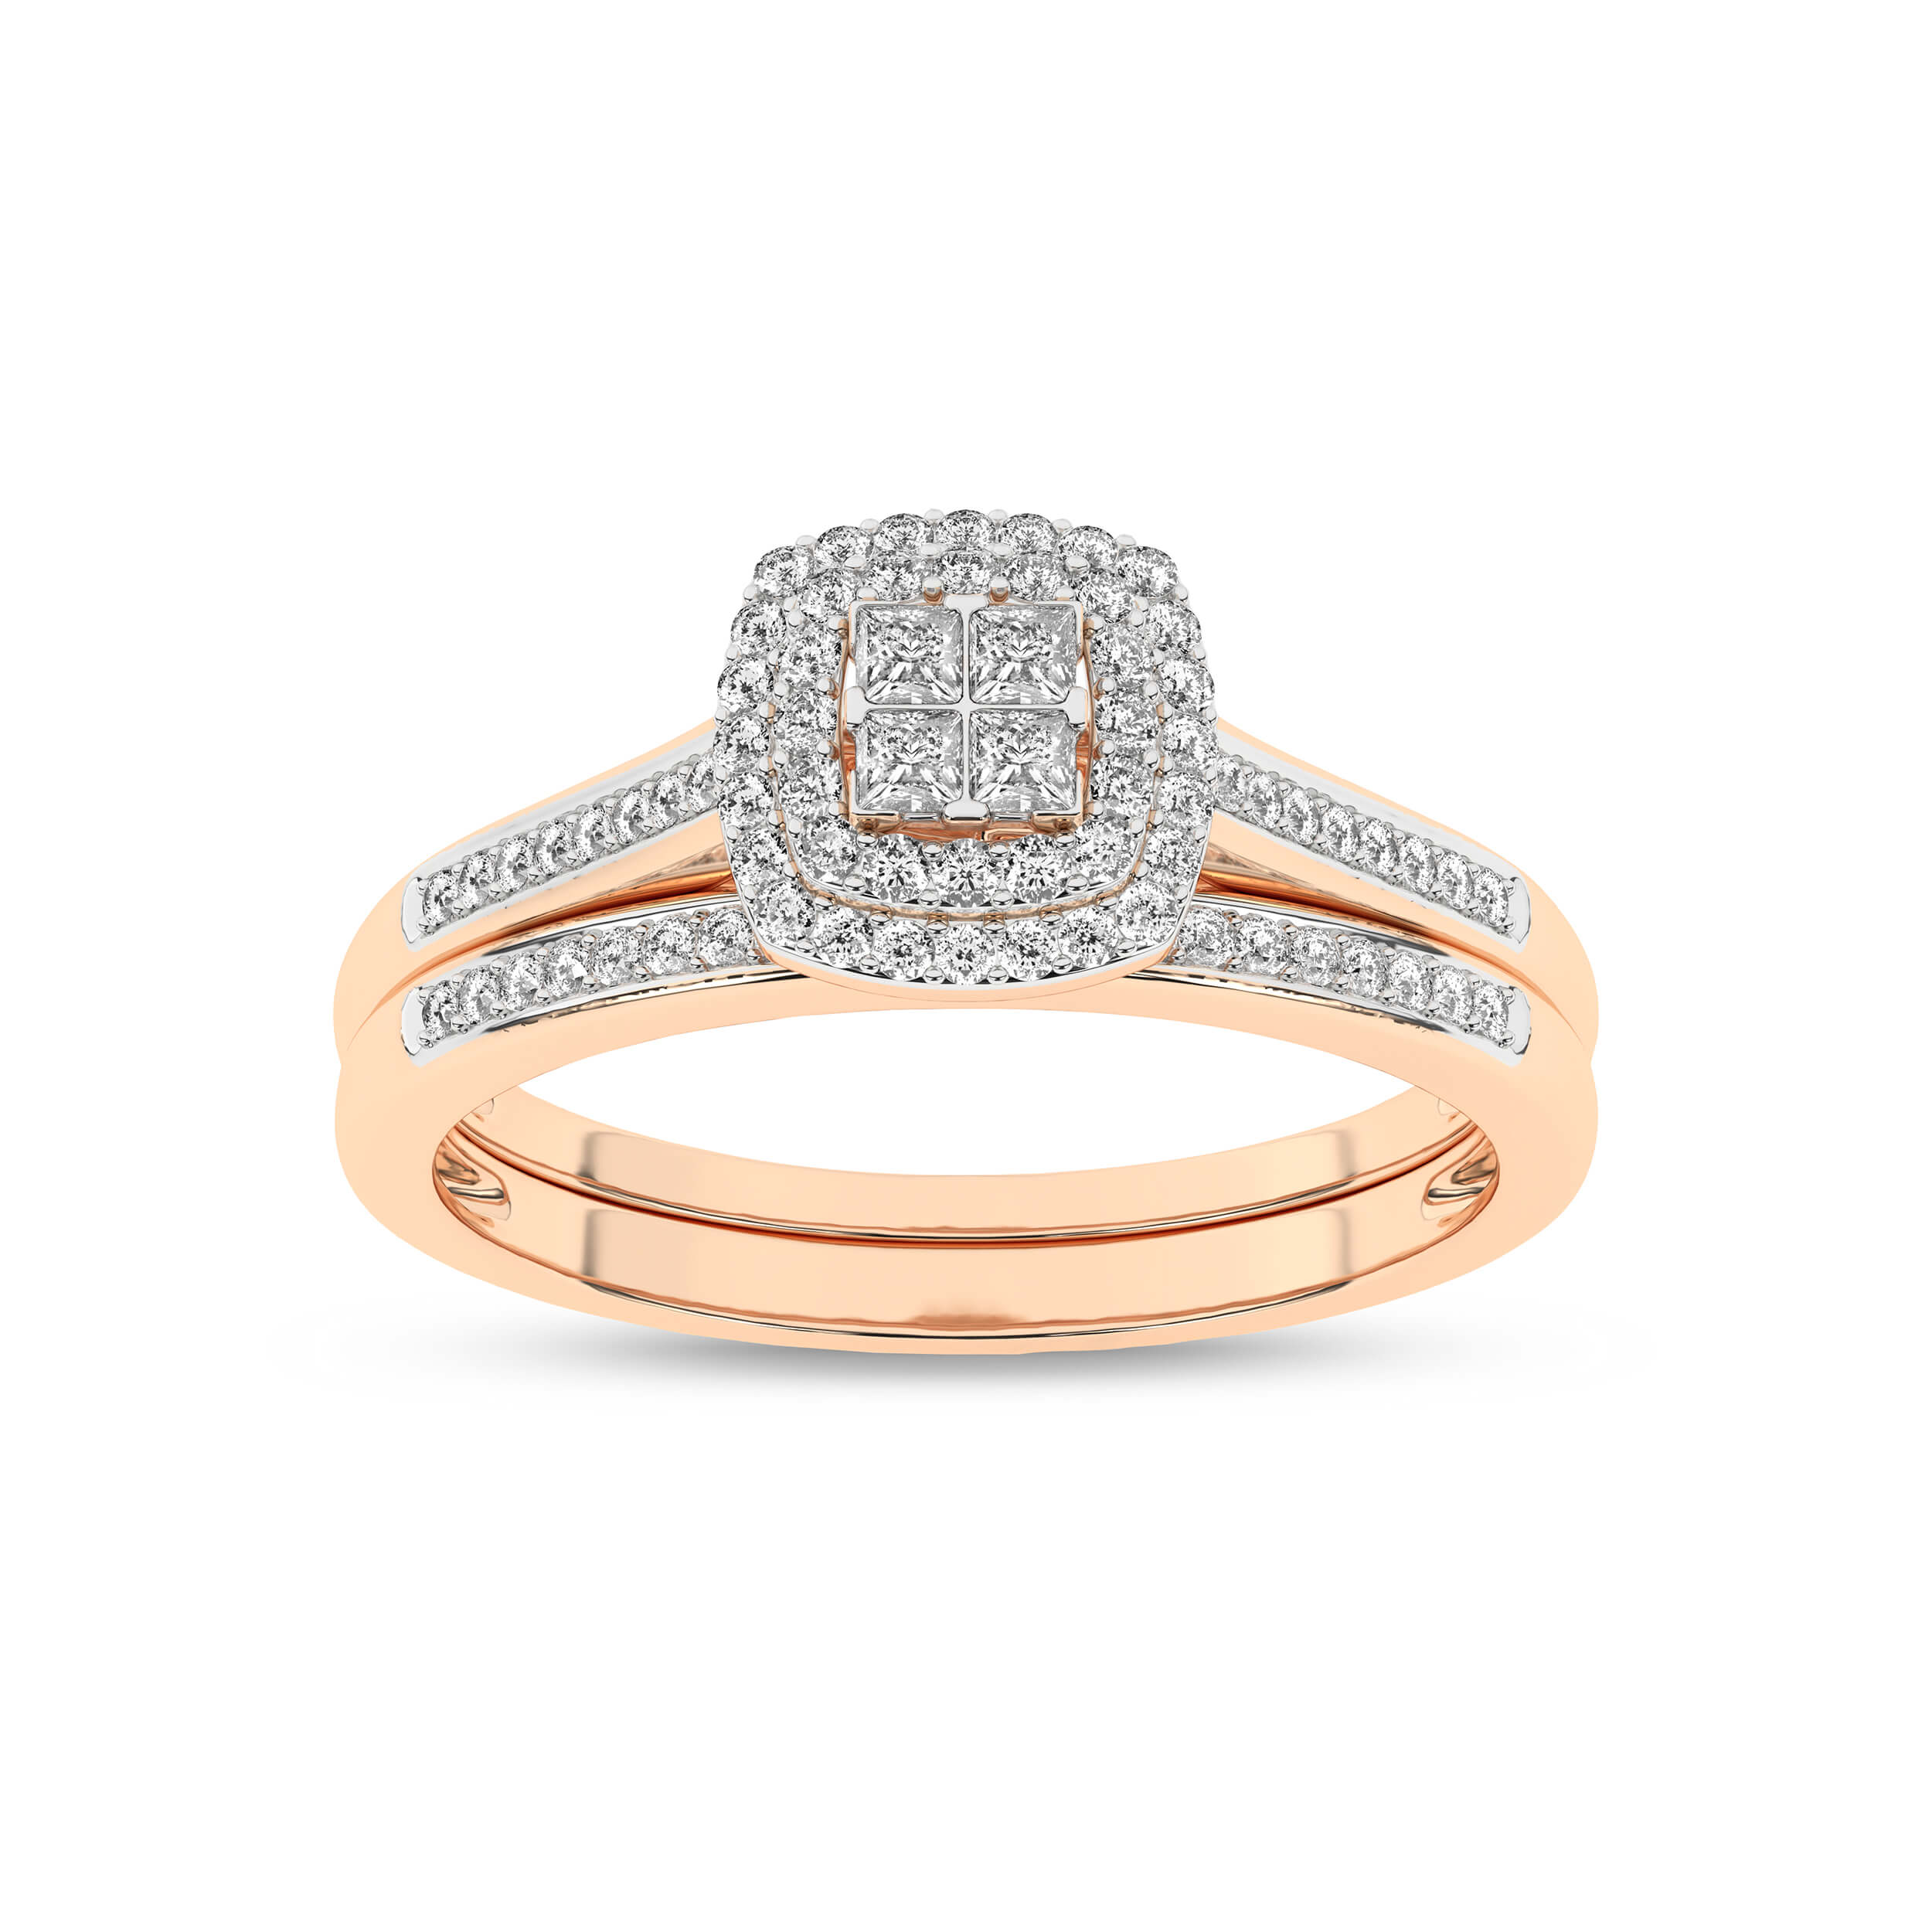 Inel de logodna din Aur Roz 14K cu Diamante 0.25Ct, articol RB13607, previzualizare foto 1